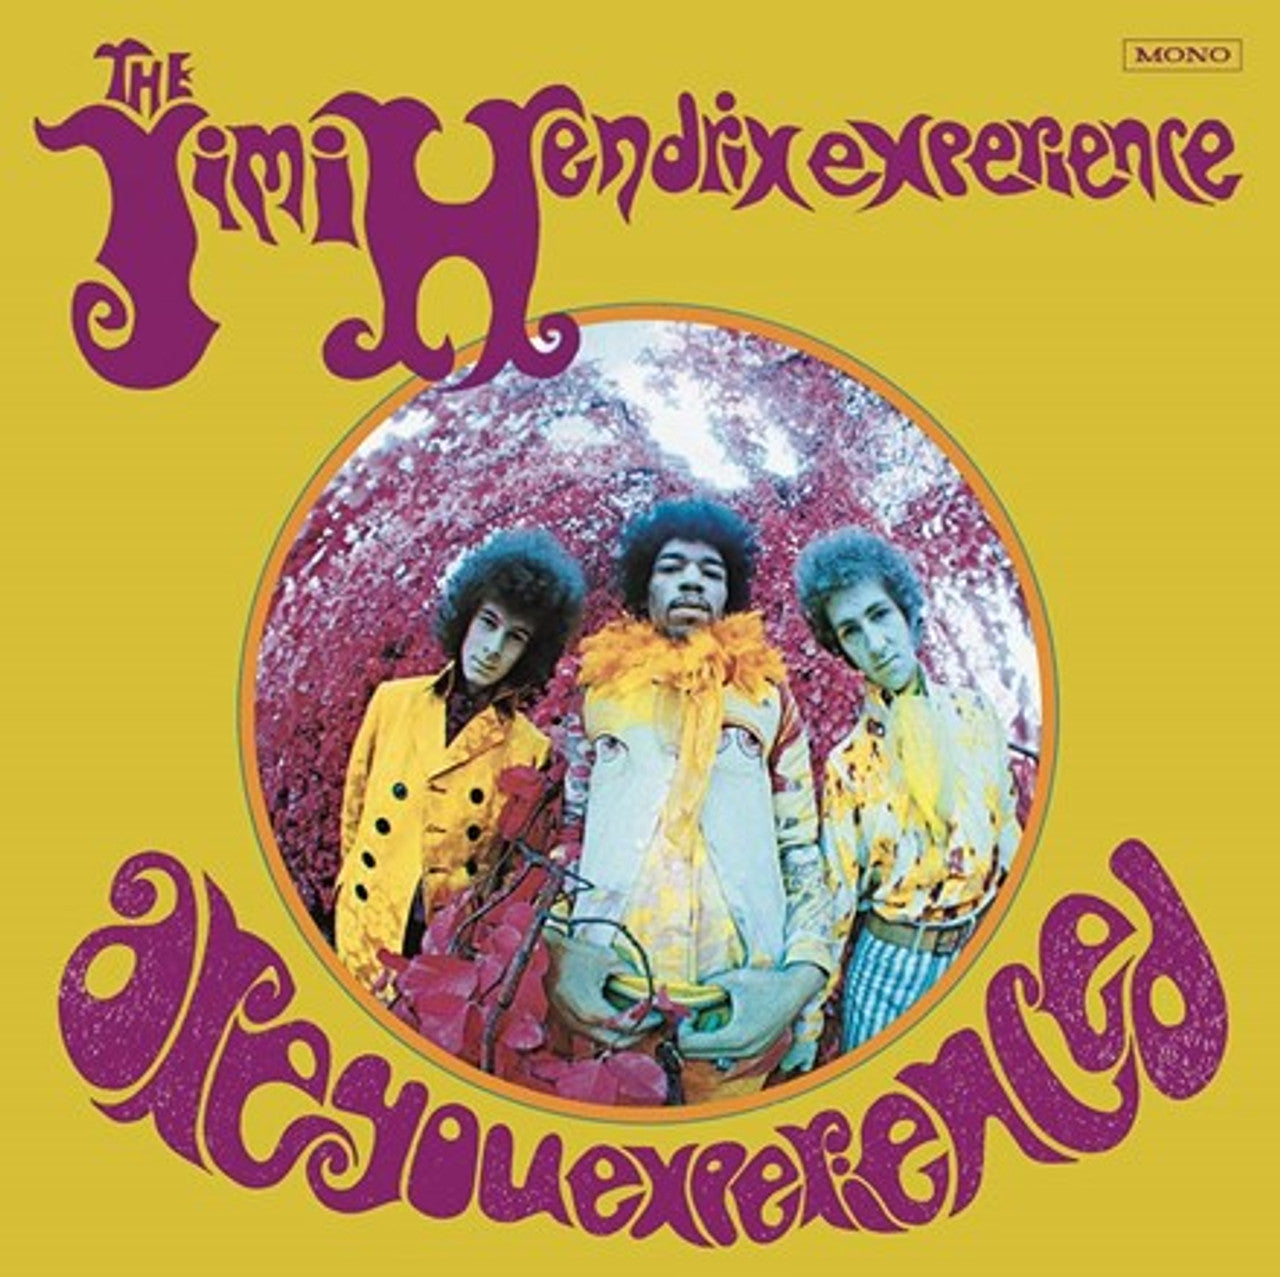 The Jimi Hendrix Experience - Are You Experienced [Mono]